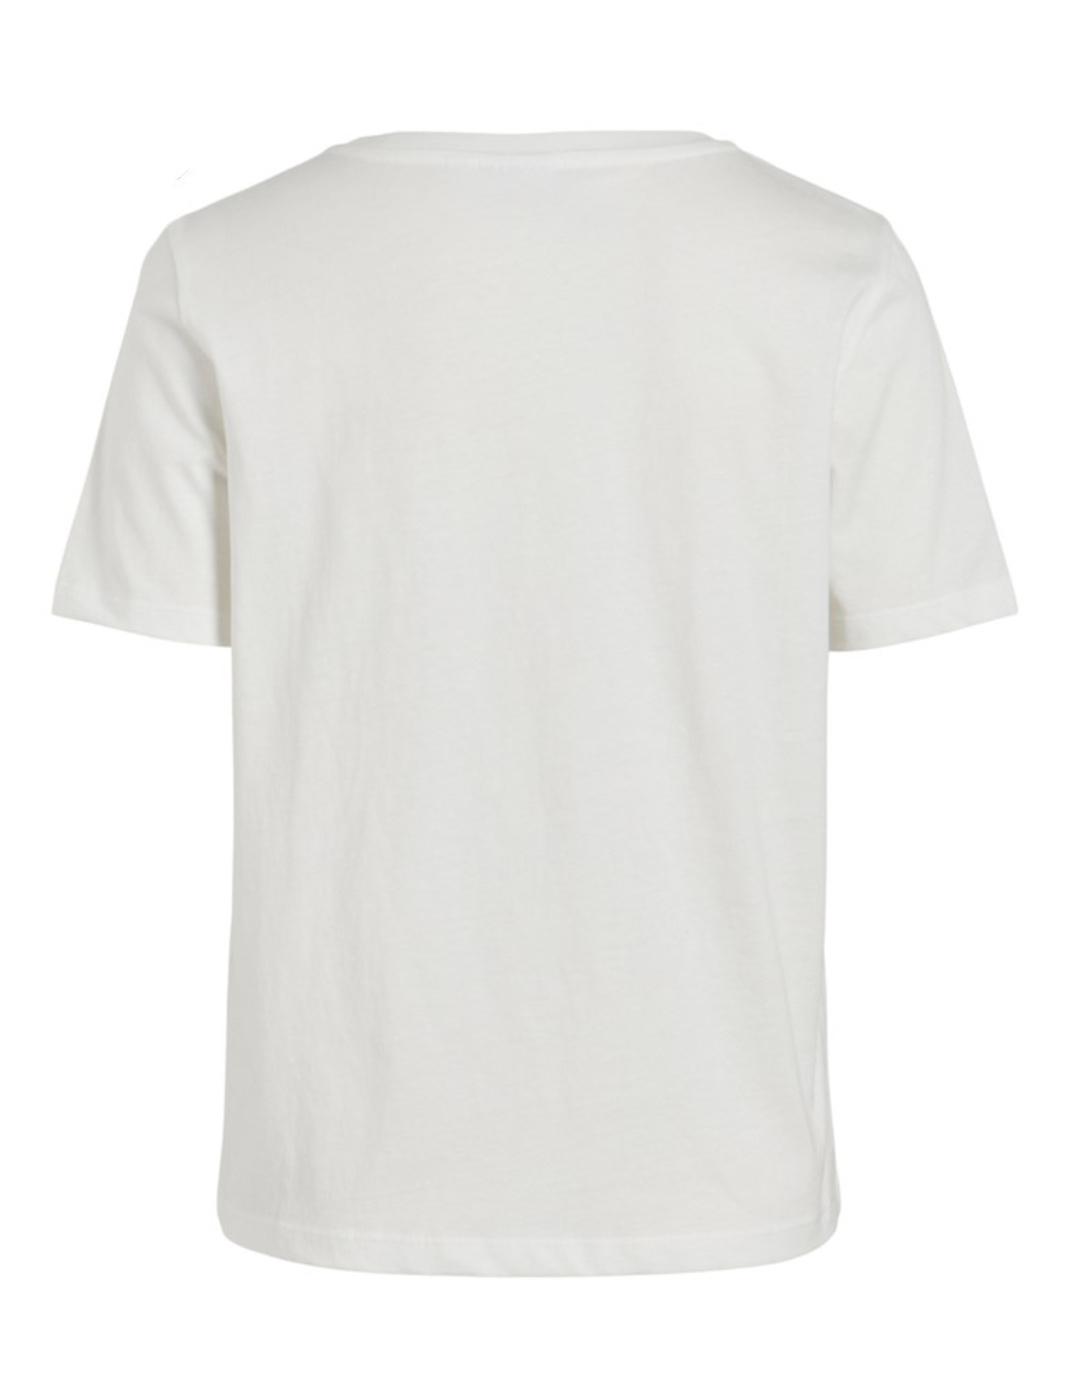 Camiseta Vila Sybil blanco y azulón manga corta para mujer